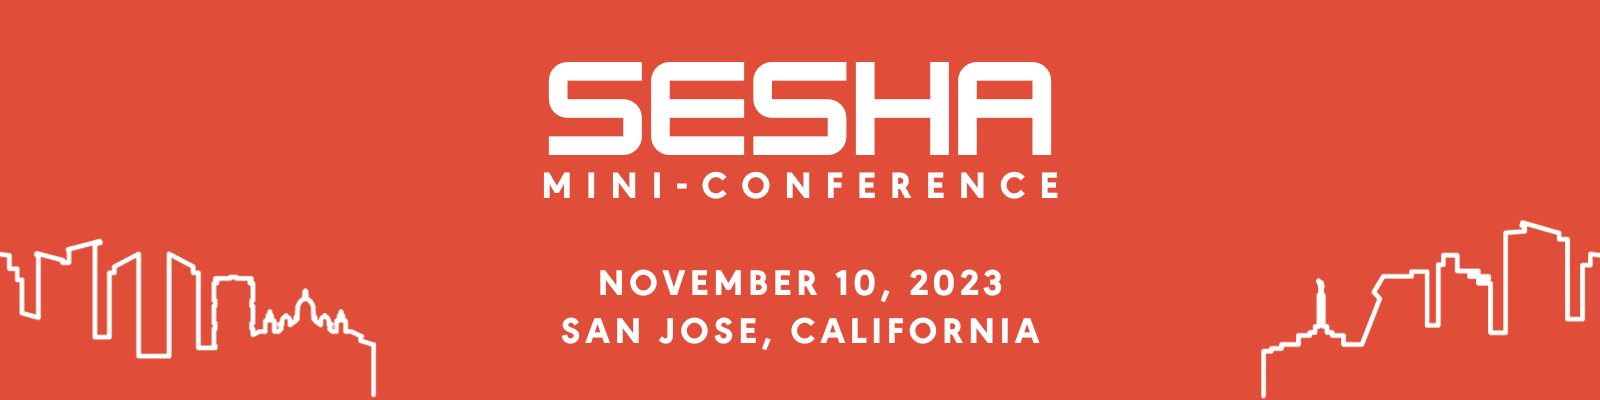 Fall 2023 San Jose Mini-Conference